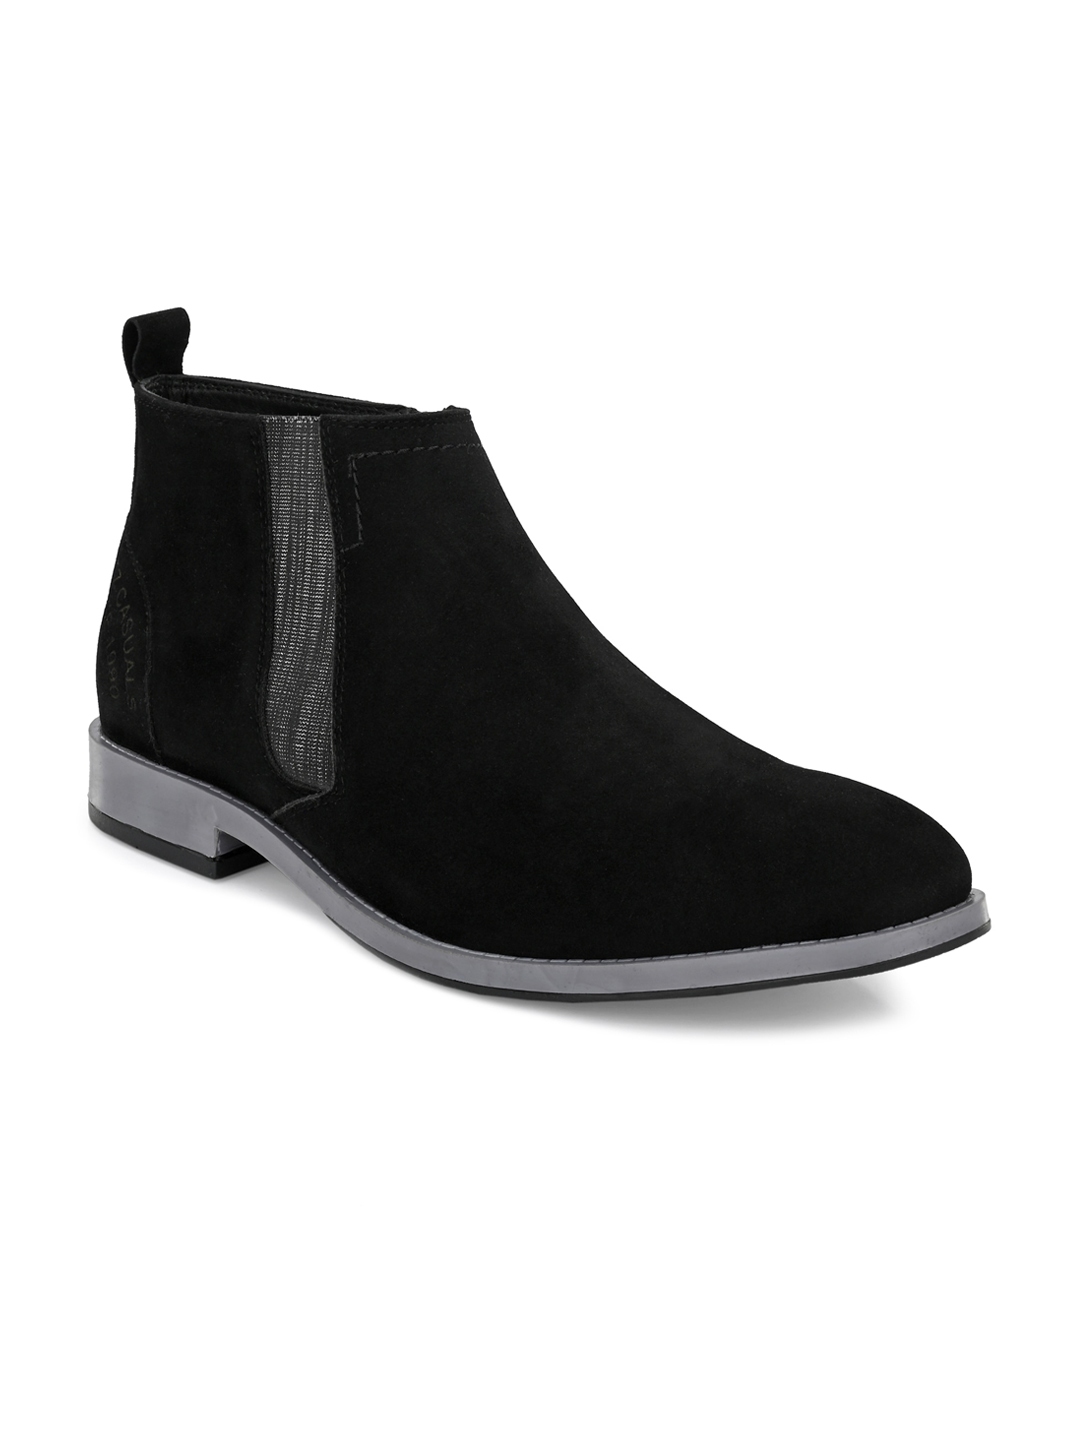 Buy Hitz Men Black Leather Flat Boots - Casual Shoes for Men 16536512 ...